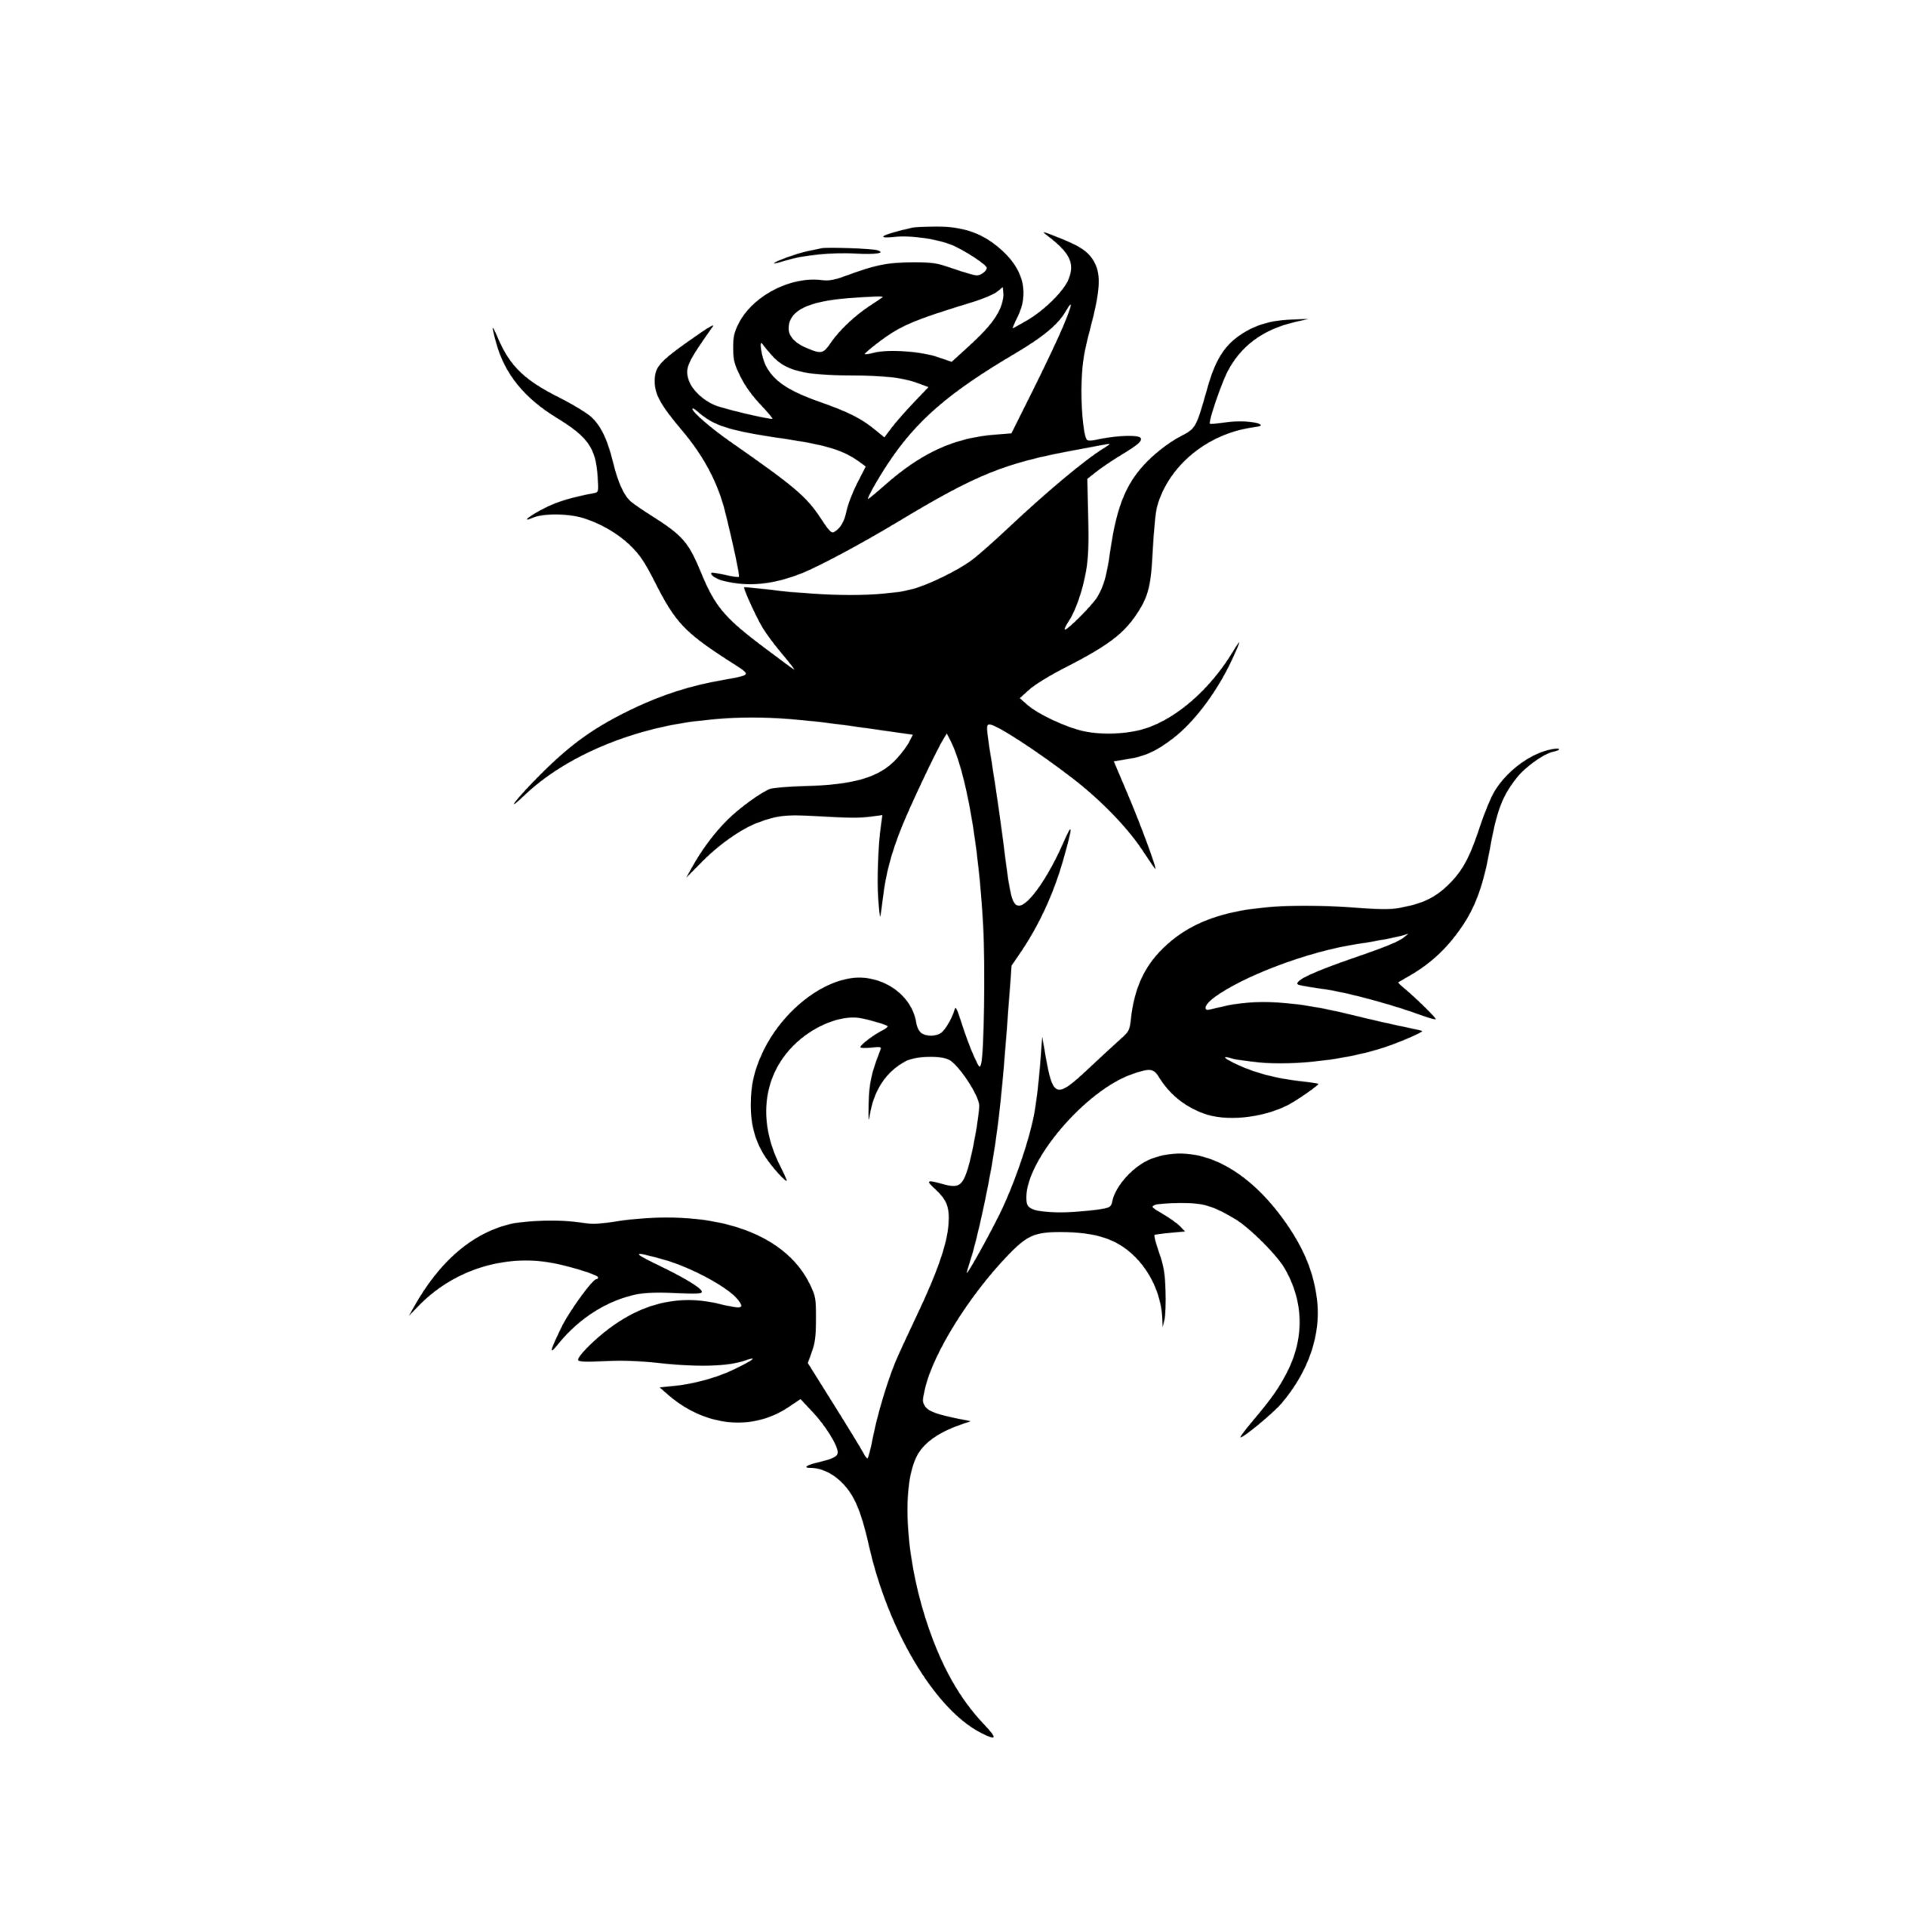 Graceful Rose SVG: Instant Download for Cricut, Silhouette, Laser